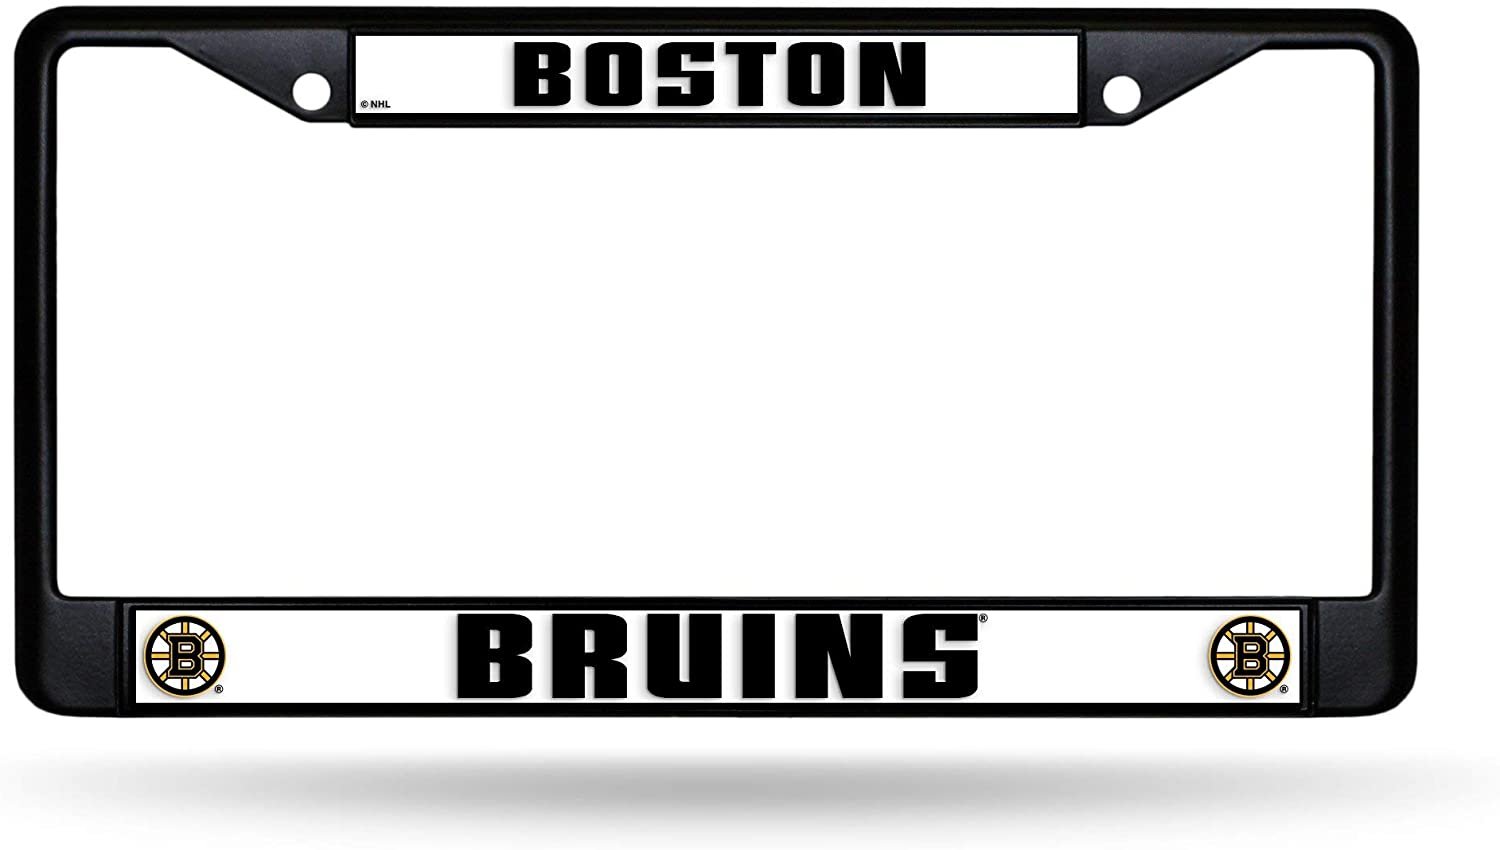 Boston Bruins Black Metal License Plate Frame Chrome Tag Cover 6x12 Inch